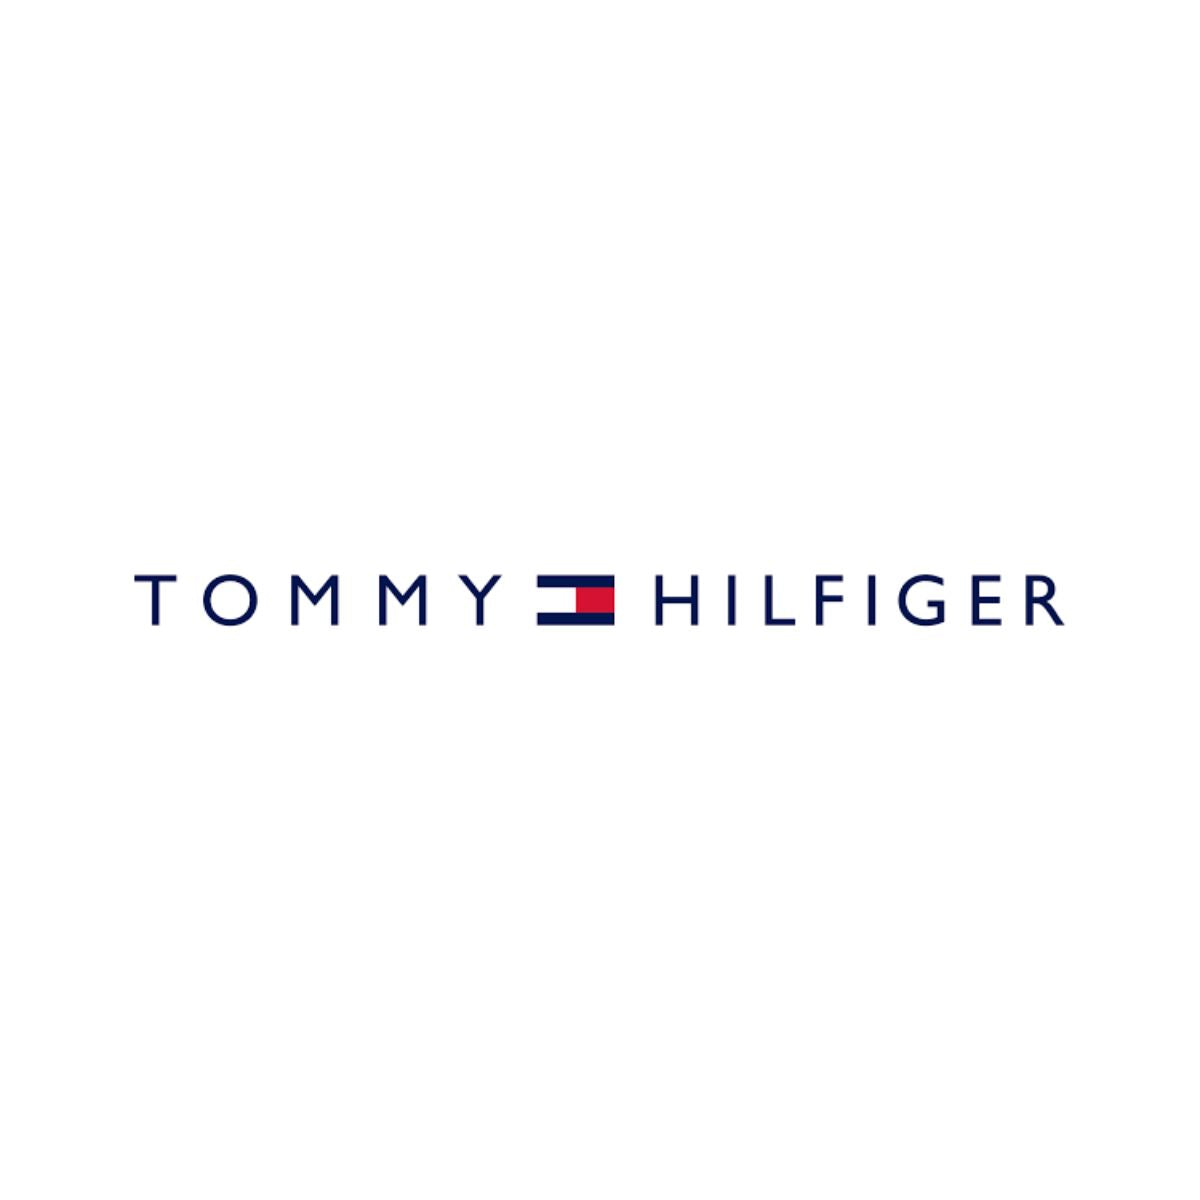 "Tommy_Hilfiger eyewear brands sunglasses & optical frames and lenses at optorium"